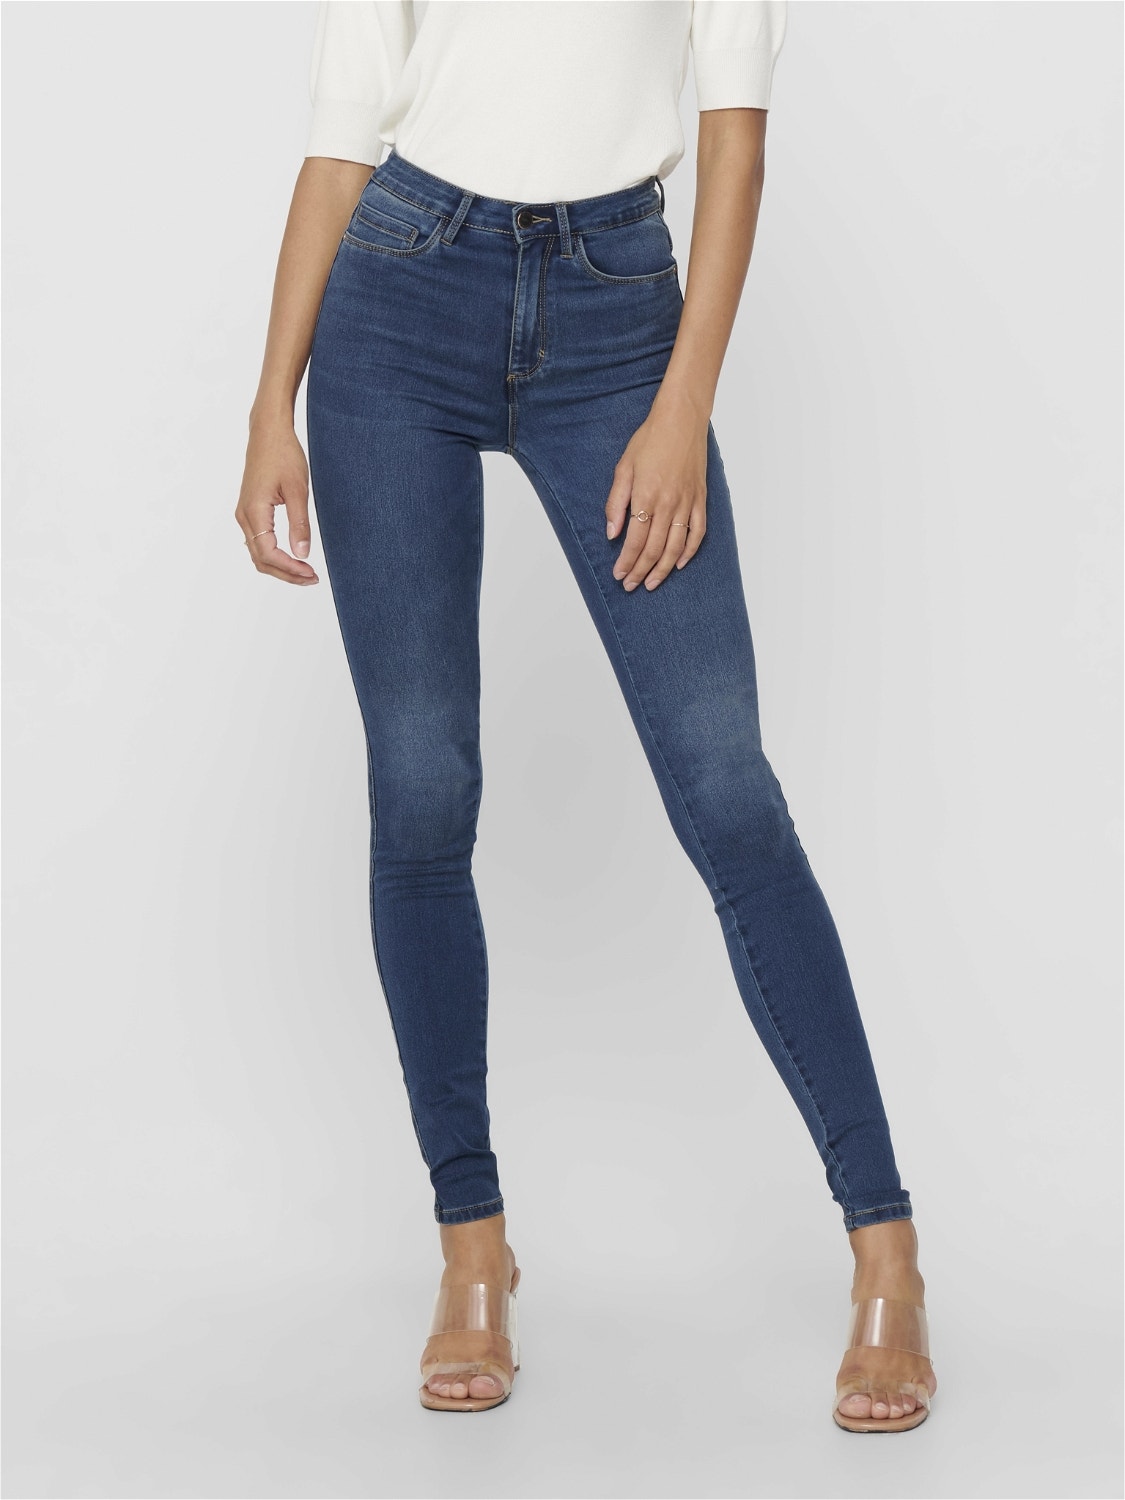 1826 Blue/Black Denim Jeans HIGH Waist Womens Plus Size Pants Skinny Leg  PL-882 (16, Midnight Blue) at  Women's Jeans store